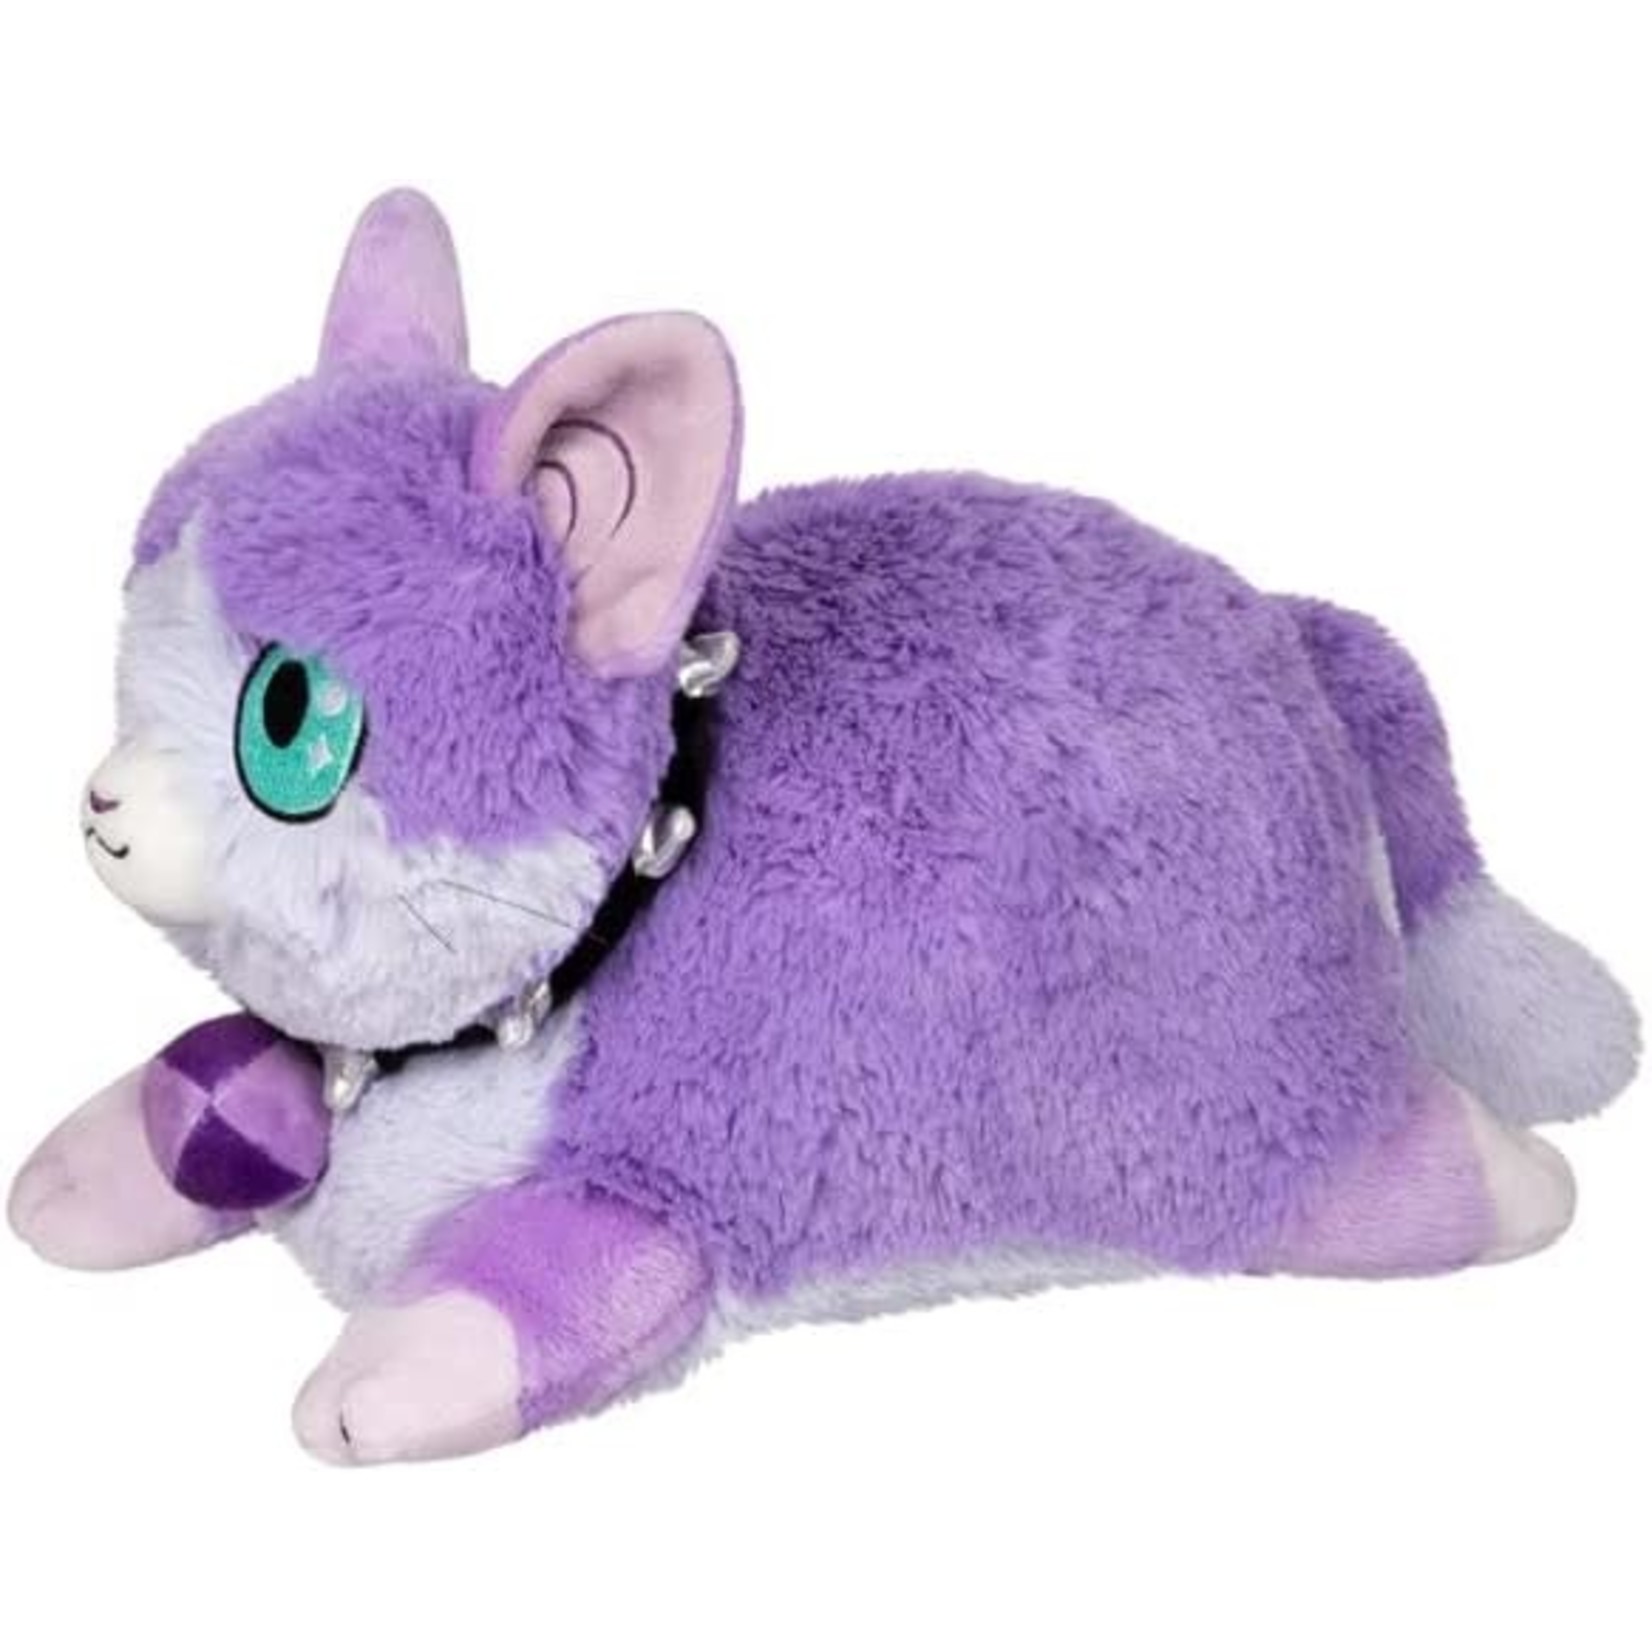 Squishable Mini: Phlox the Plague Cat